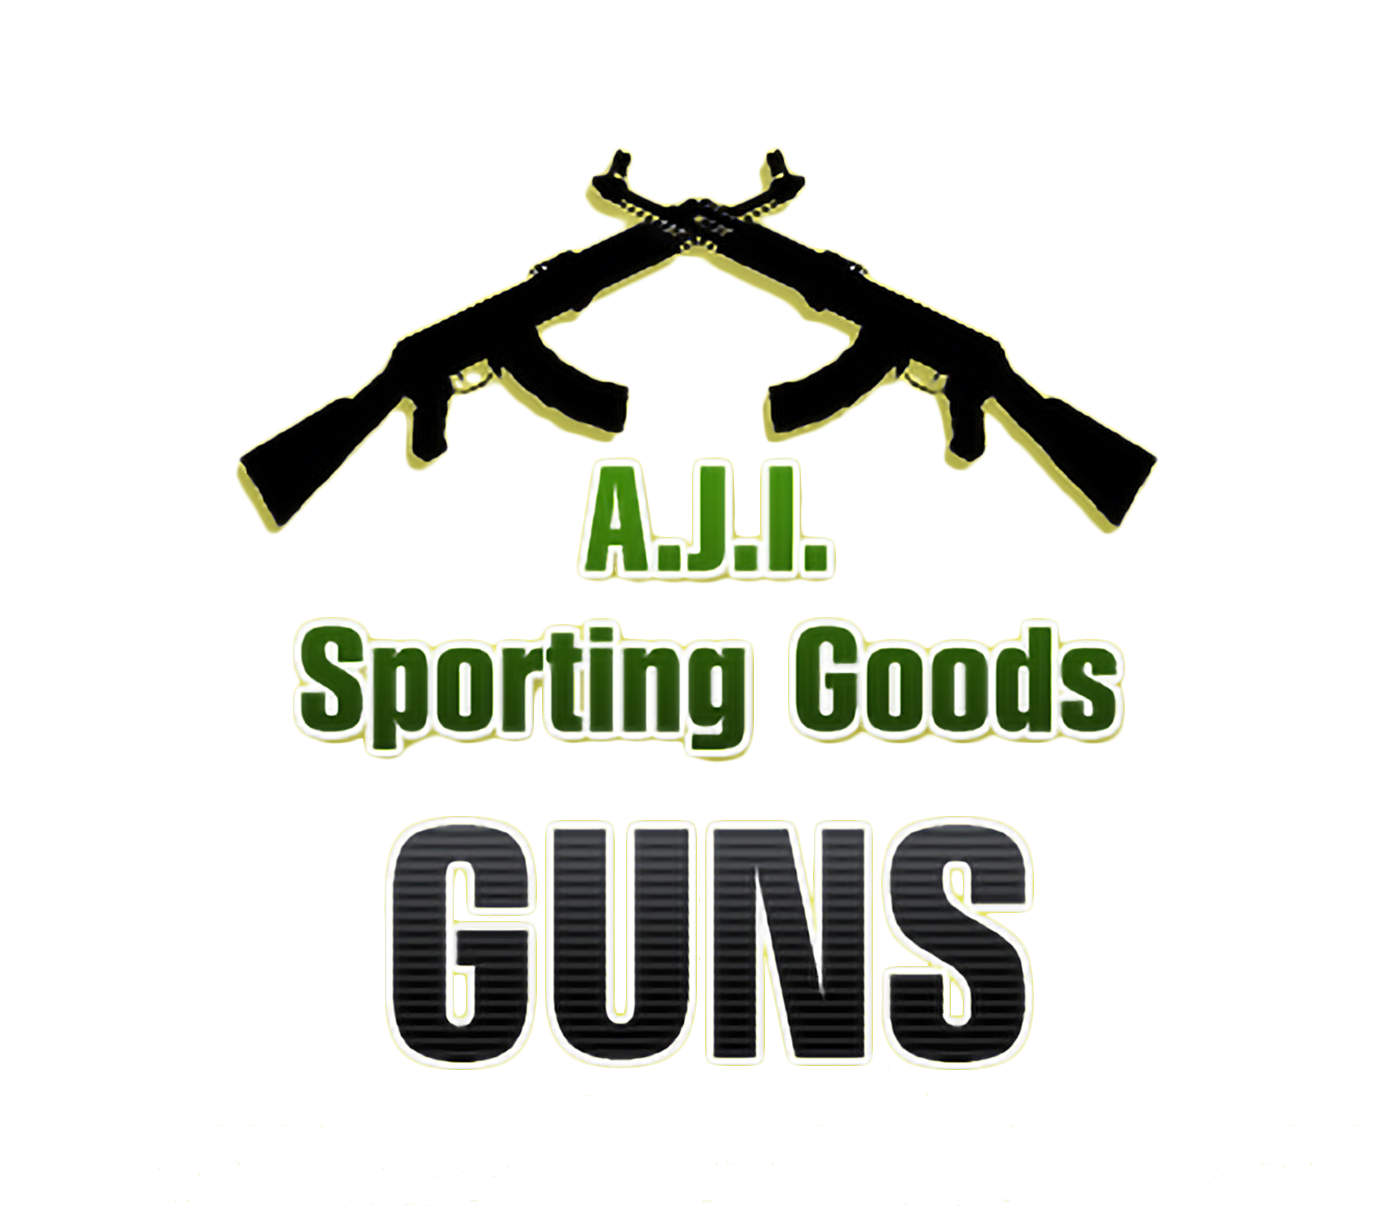 AJI Sporting Goods